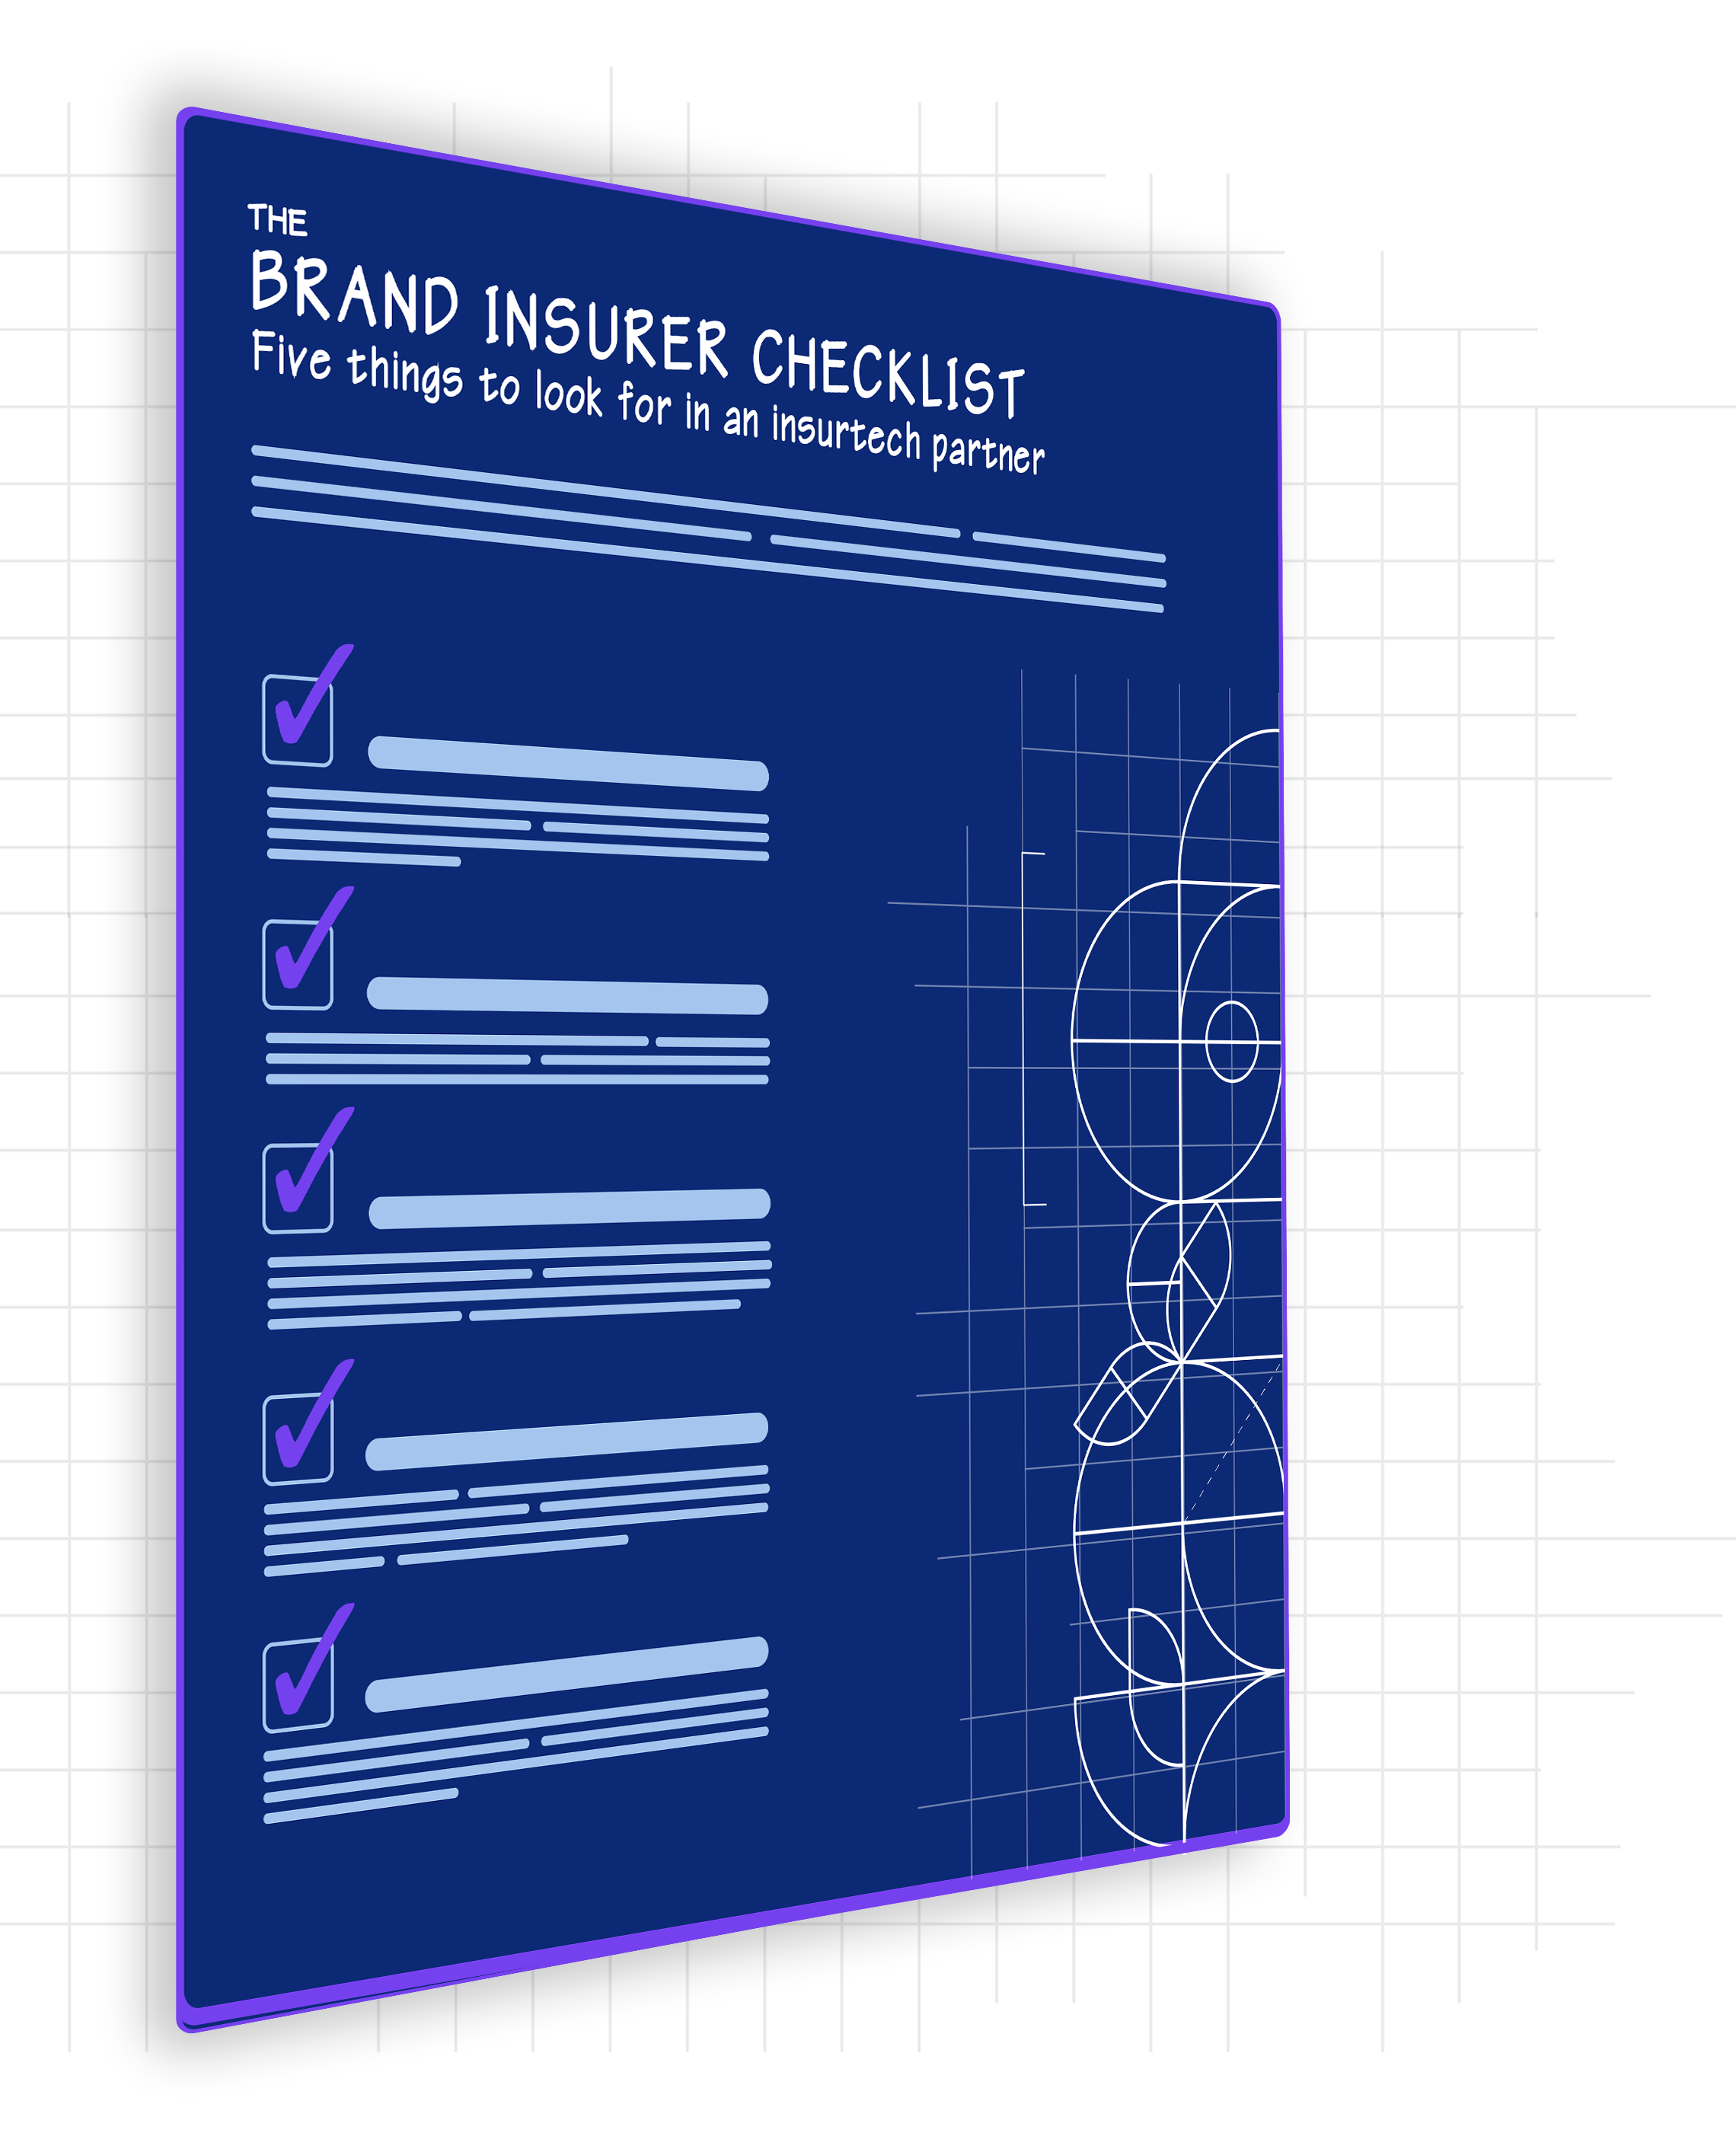 sure_brand_insurer_checklist_illustration_wgrid_angle